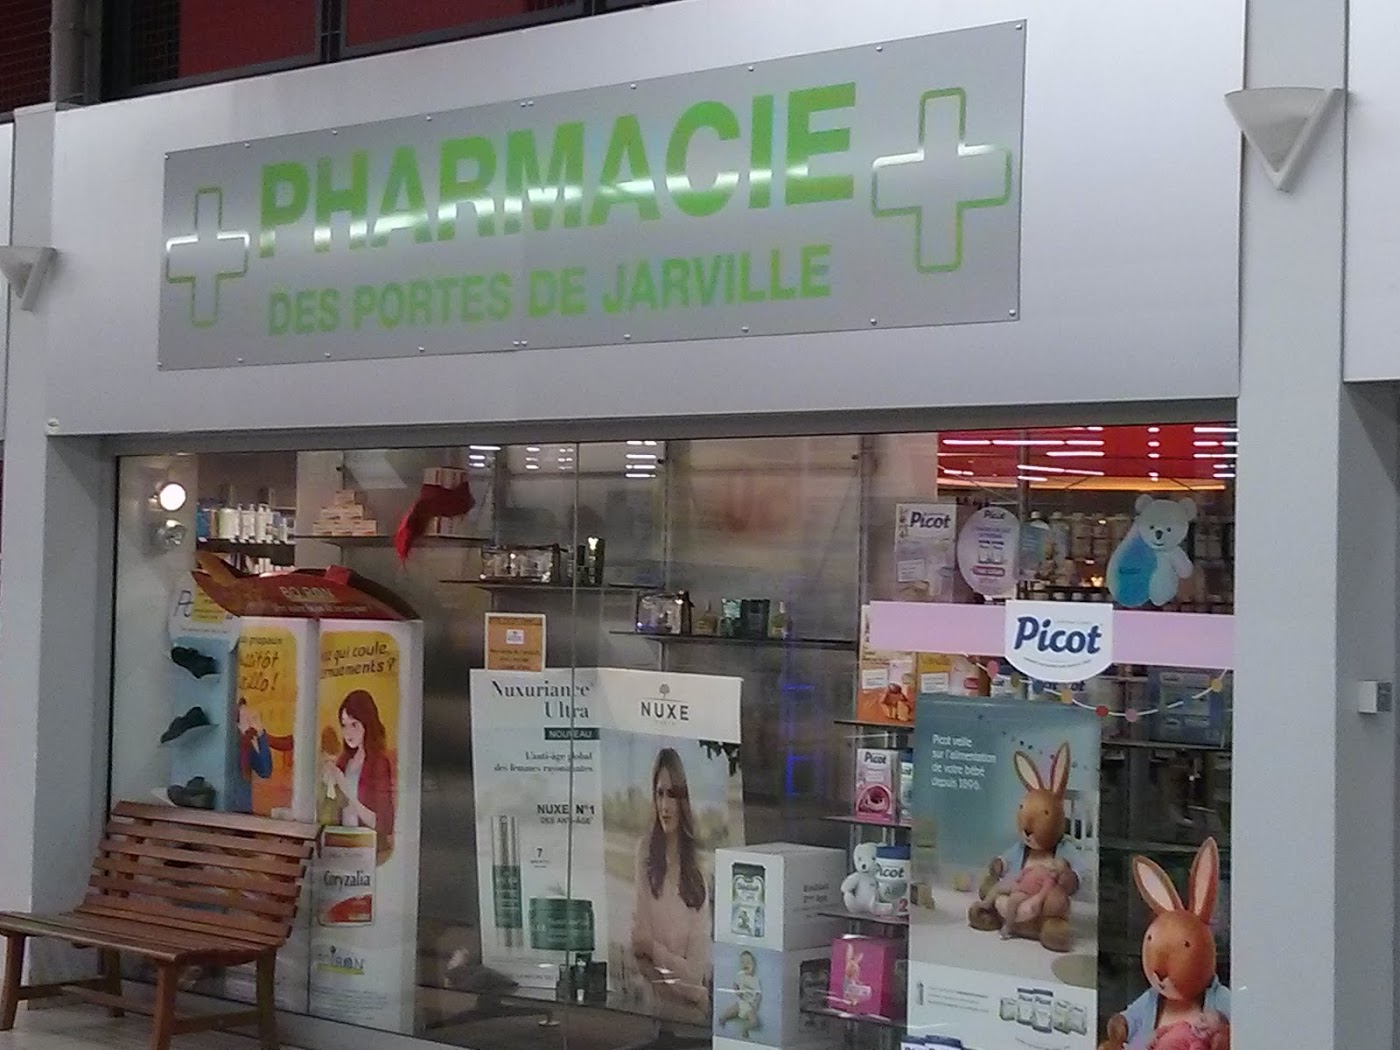 Pharmacie wellpharma | Pharmacie des Portes de Jarville